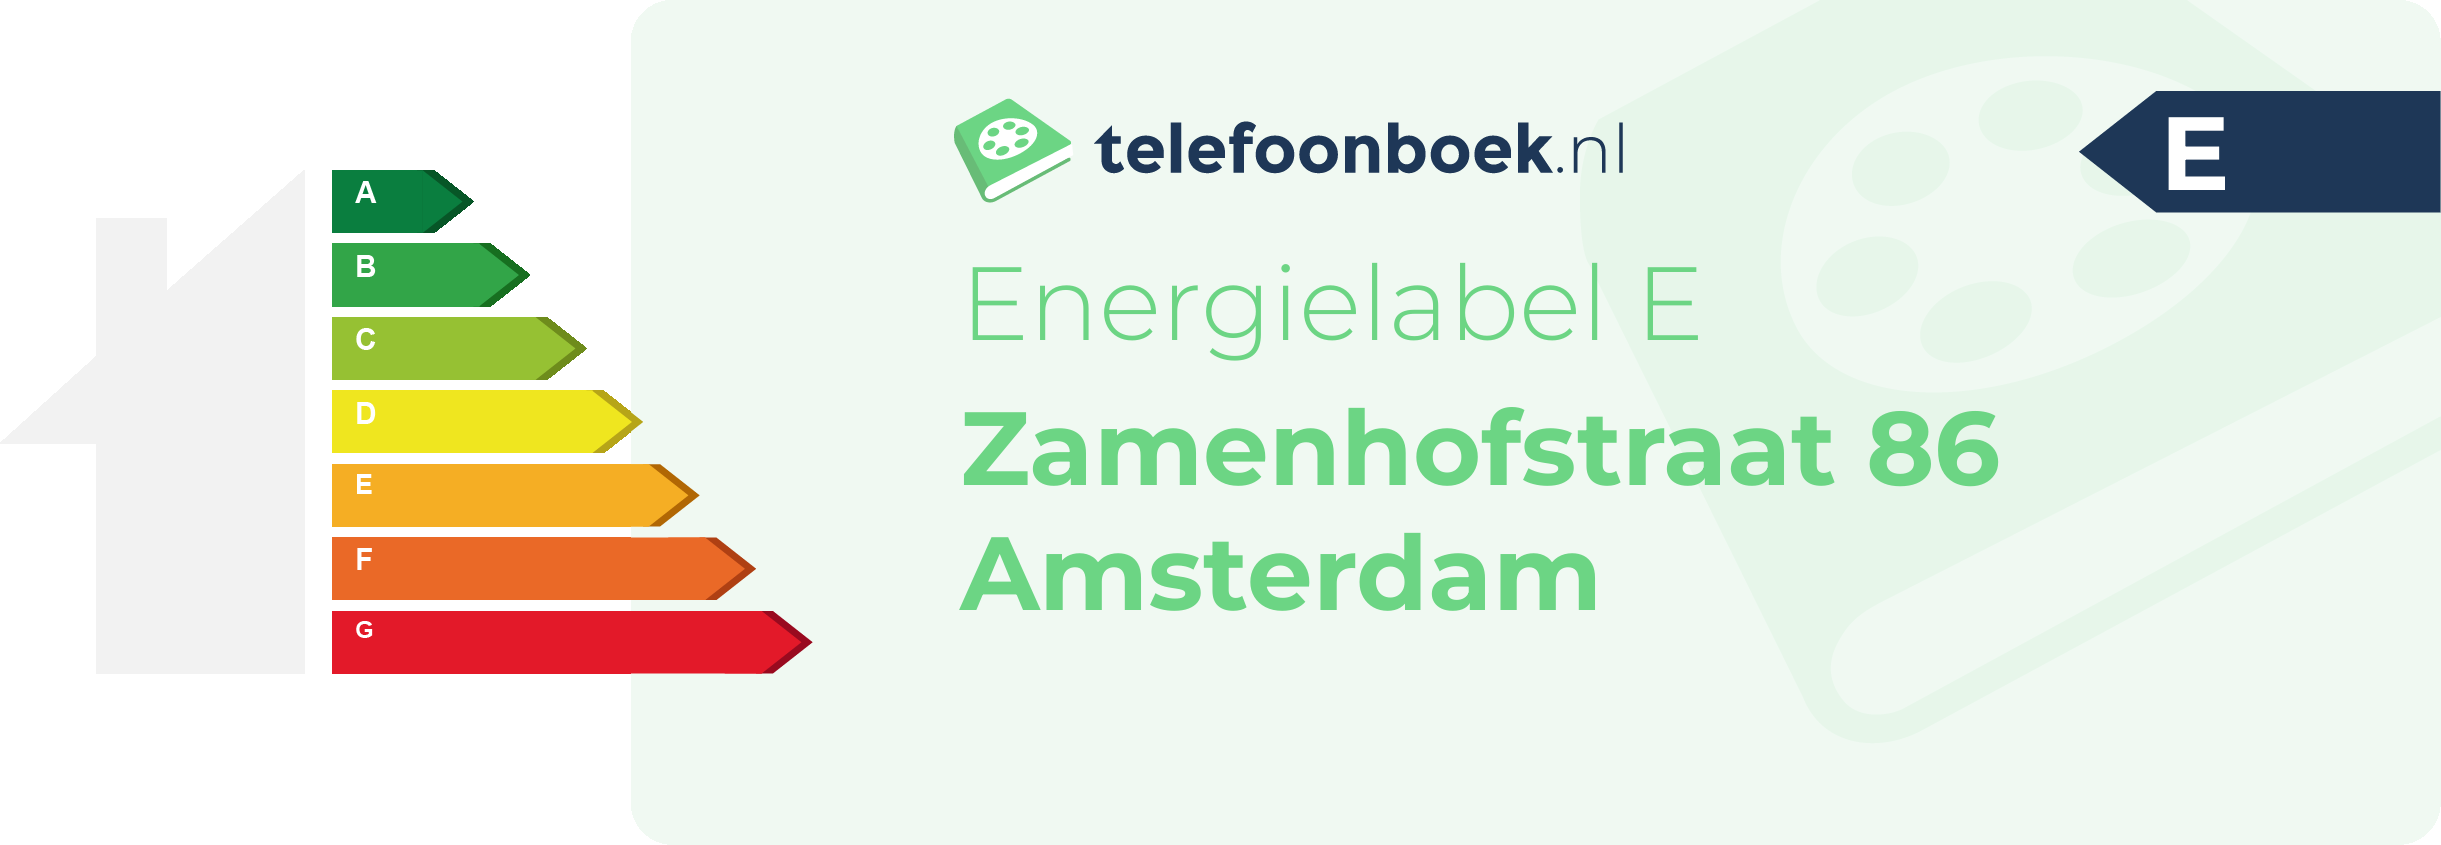 Energielabel Zamenhofstraat 86 Amsterdam